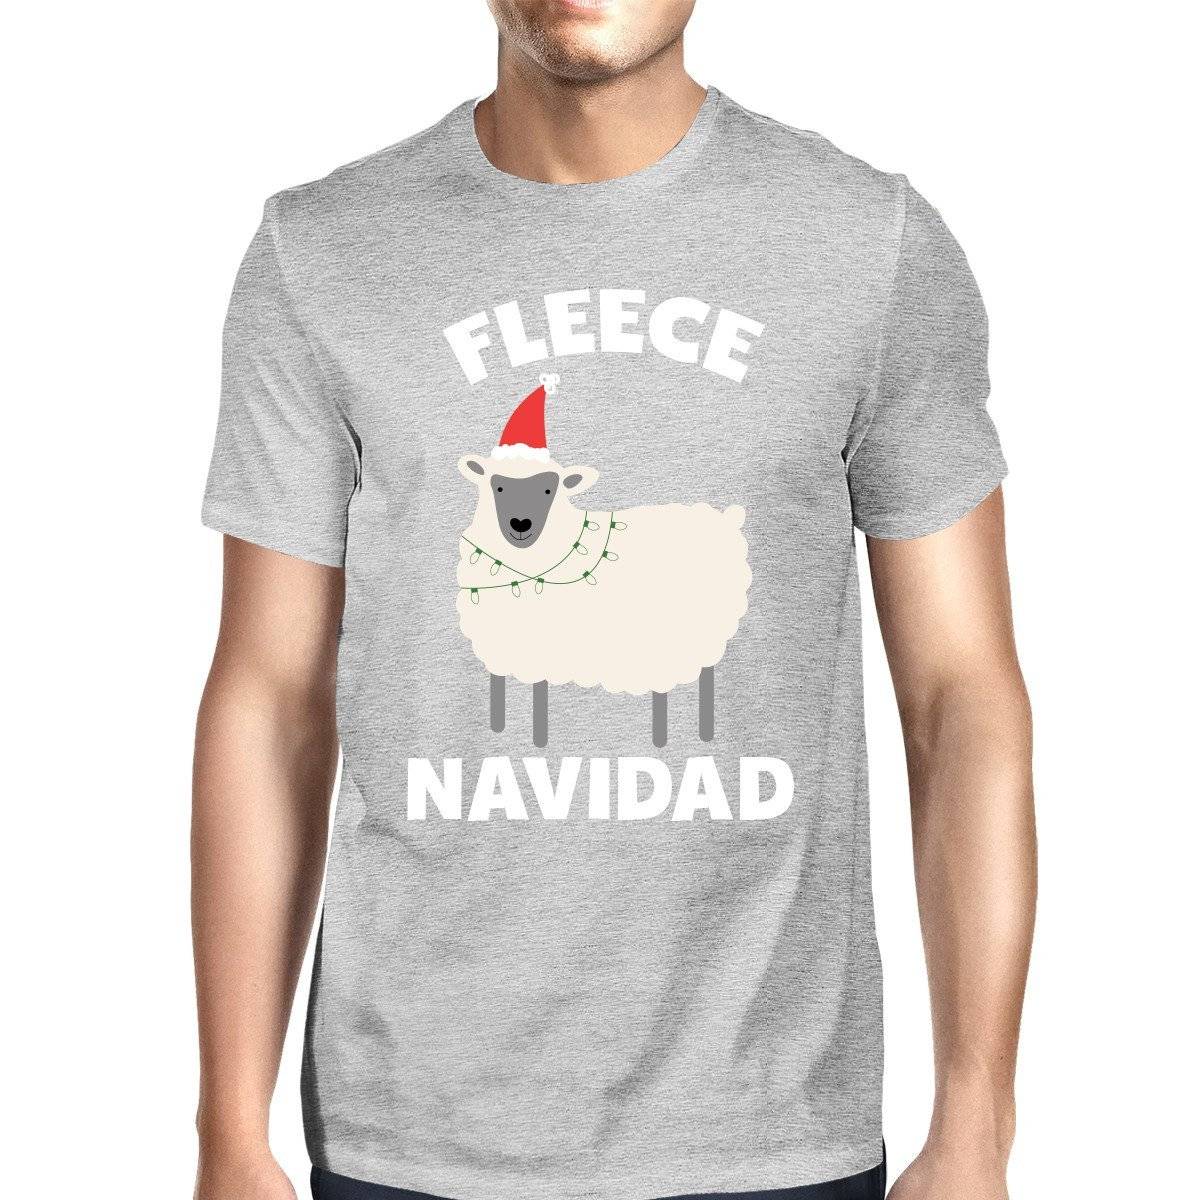 Fleece Navidad Grey Men's Shirt Funny Christmas Gift Graphic Tee